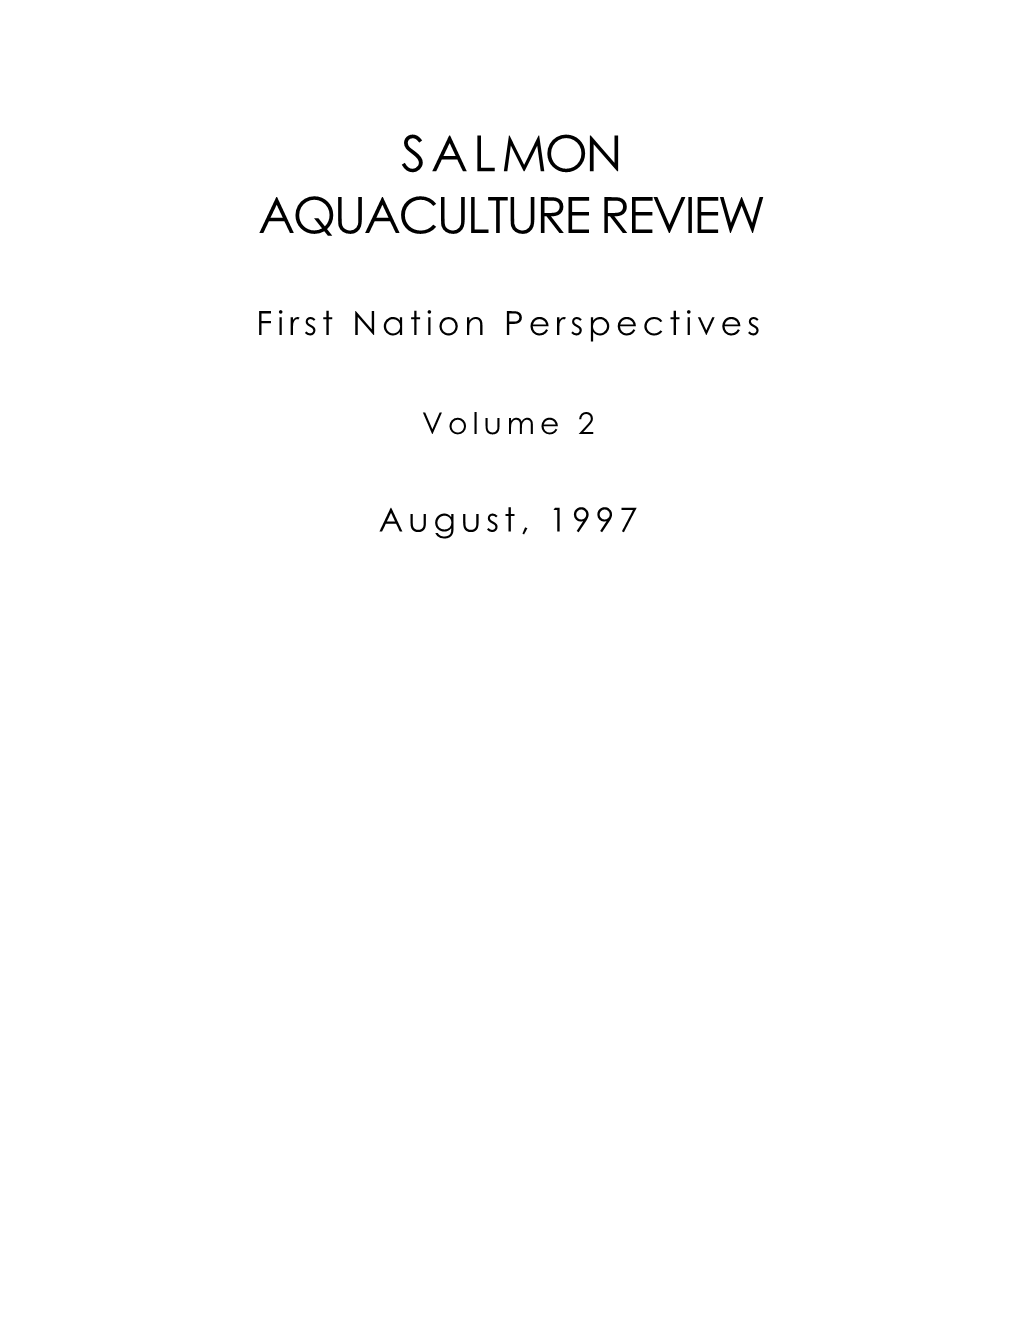 Salmon Aquaculture Review